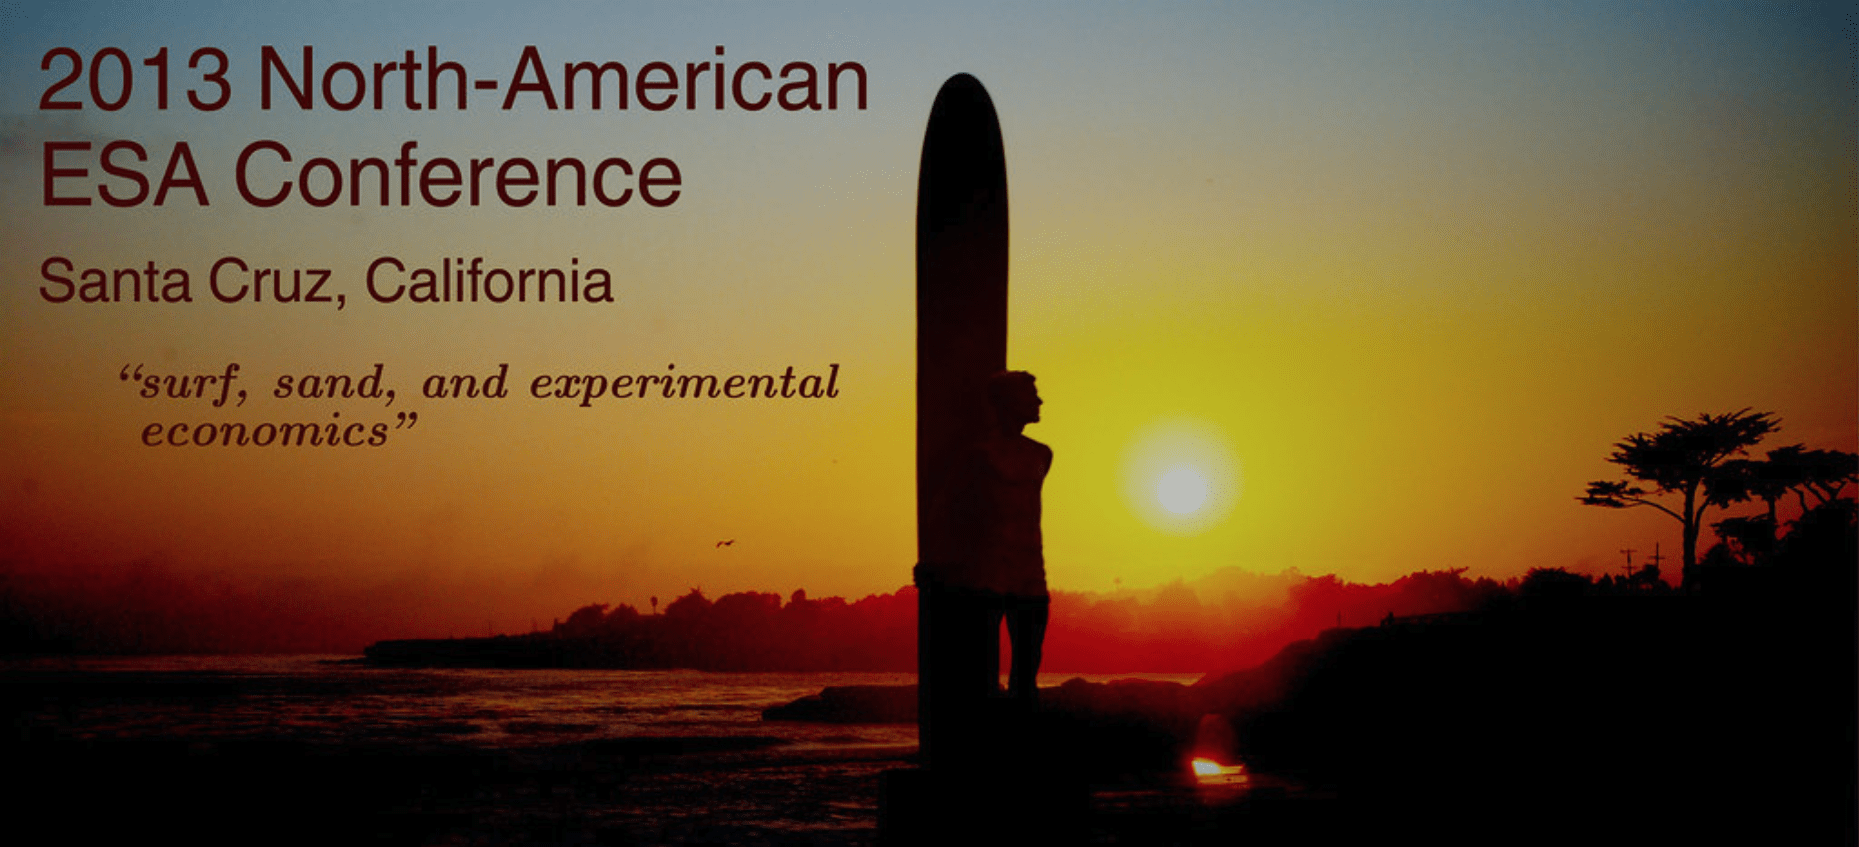 Picture of surfer in Santa Cruz. Text in image reads: 2013 North-American ESA Conference, Santa Cruz, CA. "Surf, sand, and experimental economics."